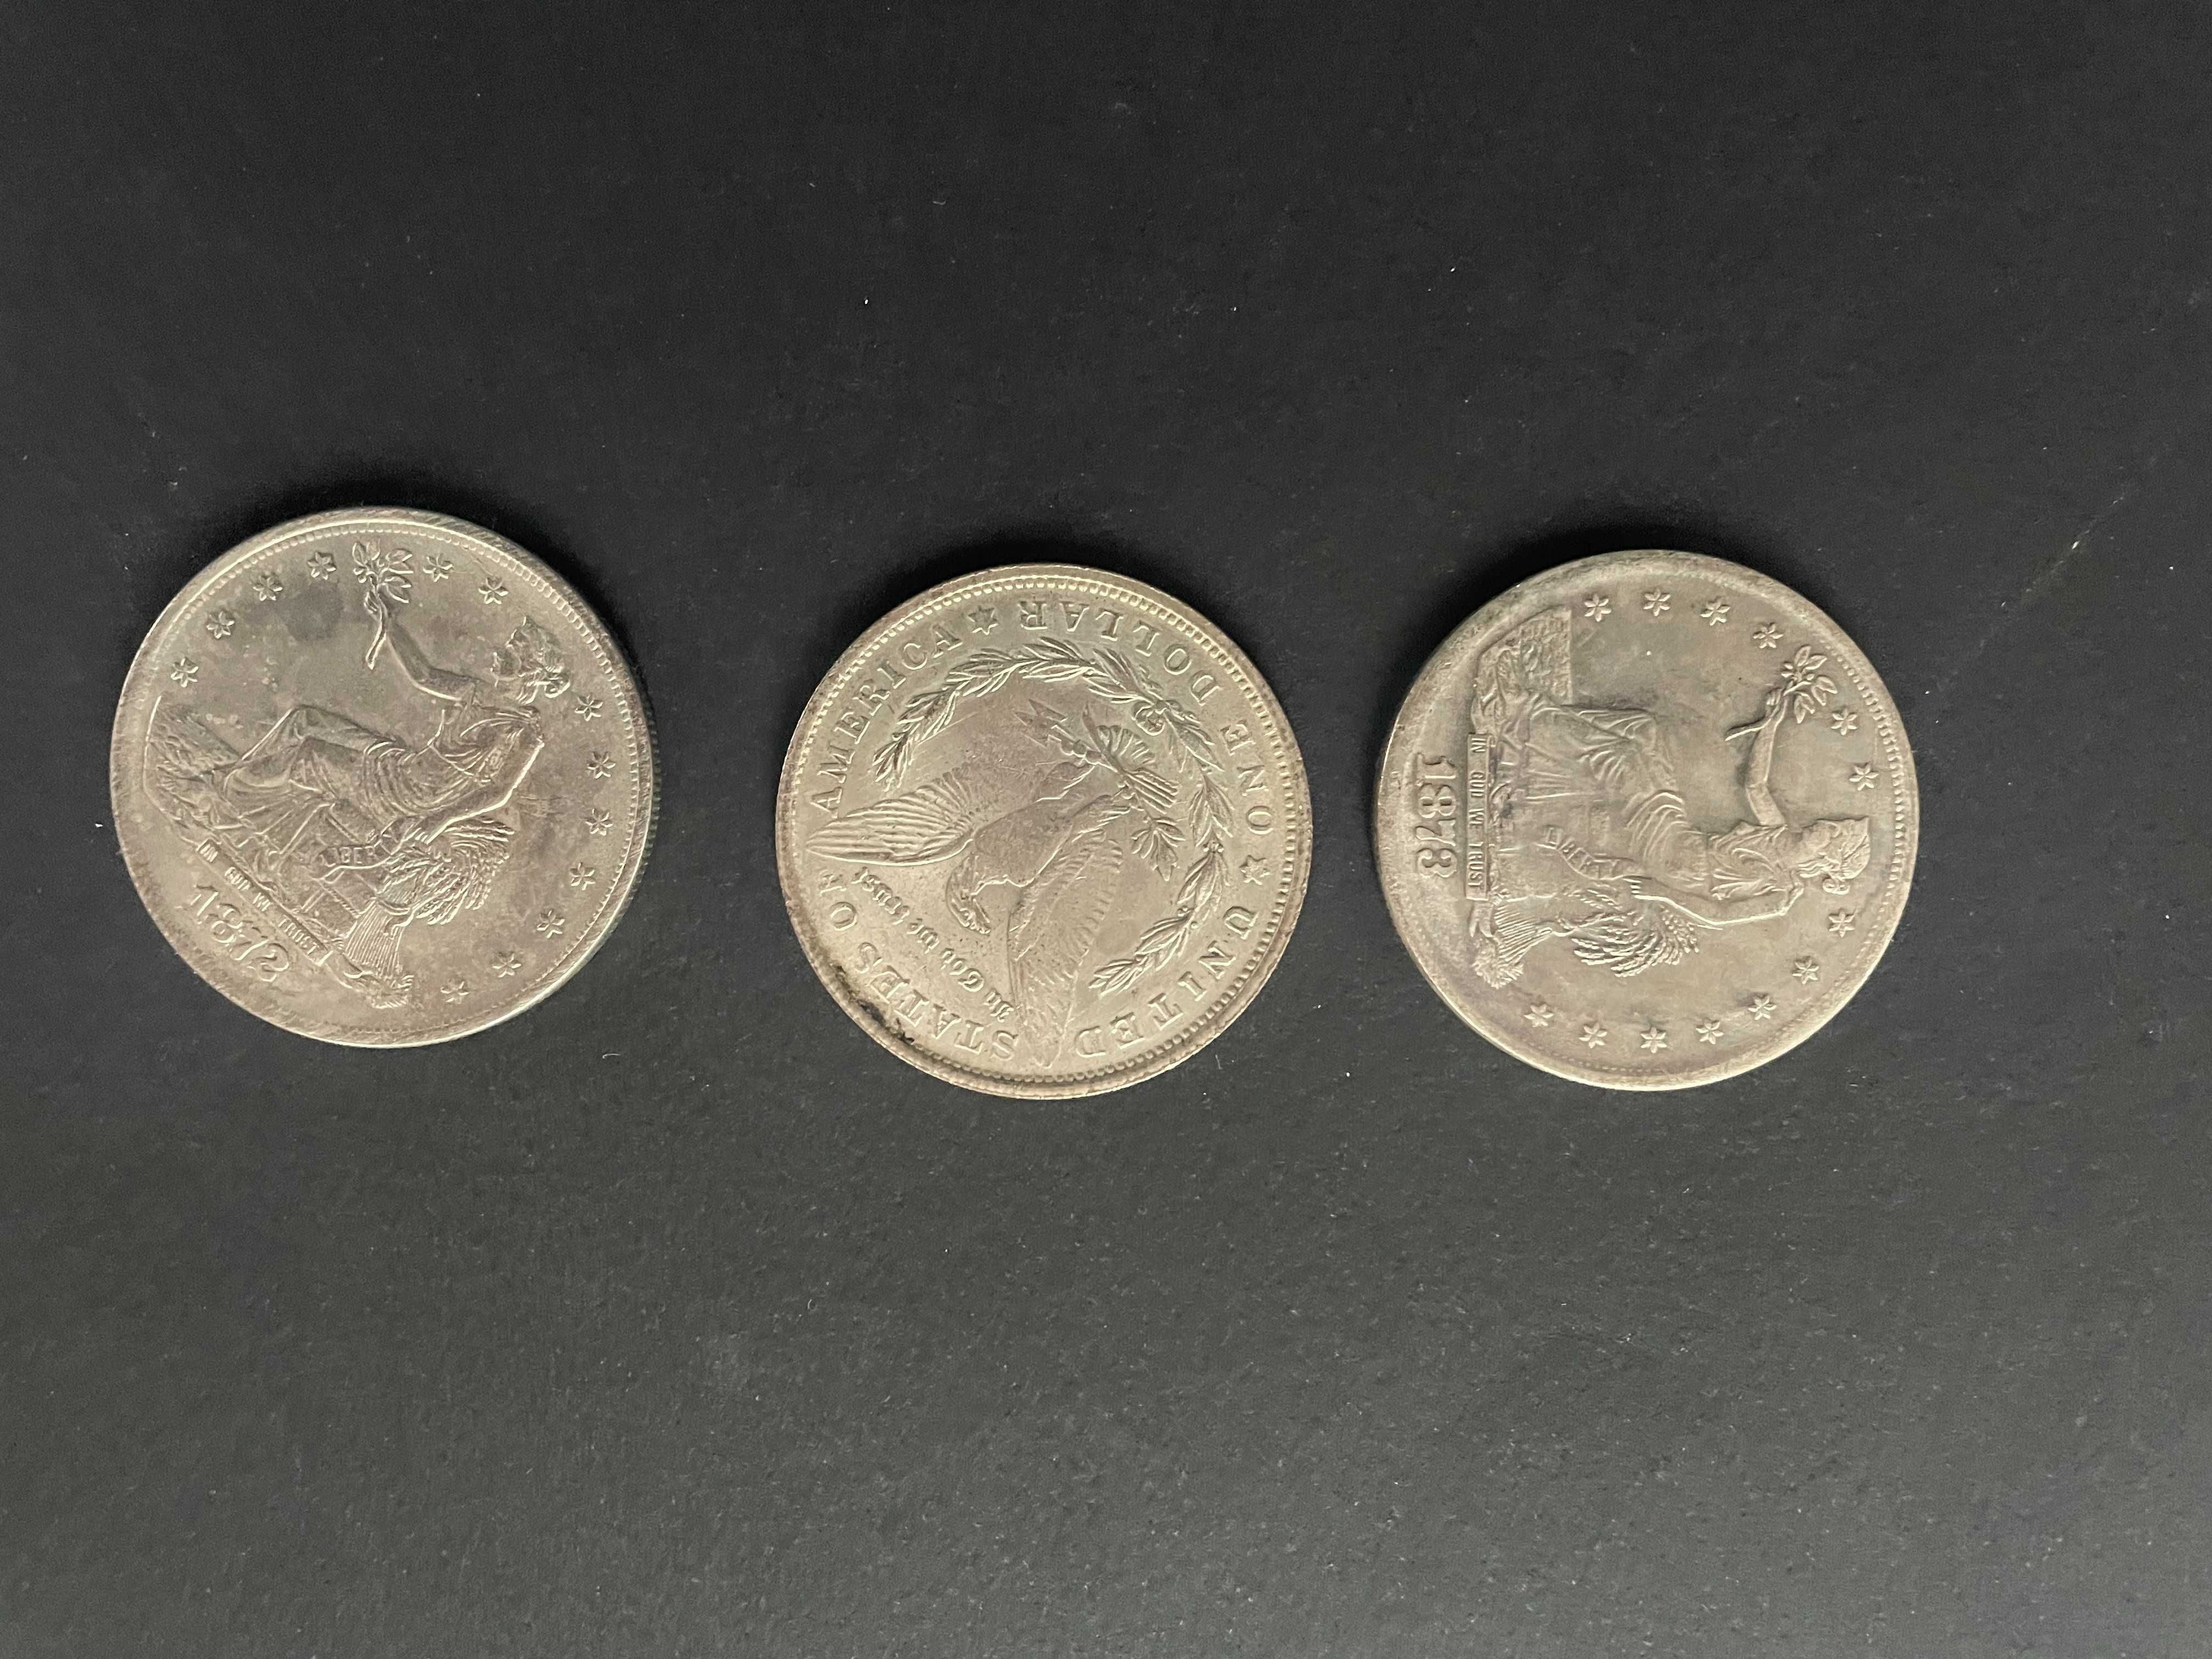 59 monezi argintate - 51 asiatice 4 Regele Mihai 3 americane